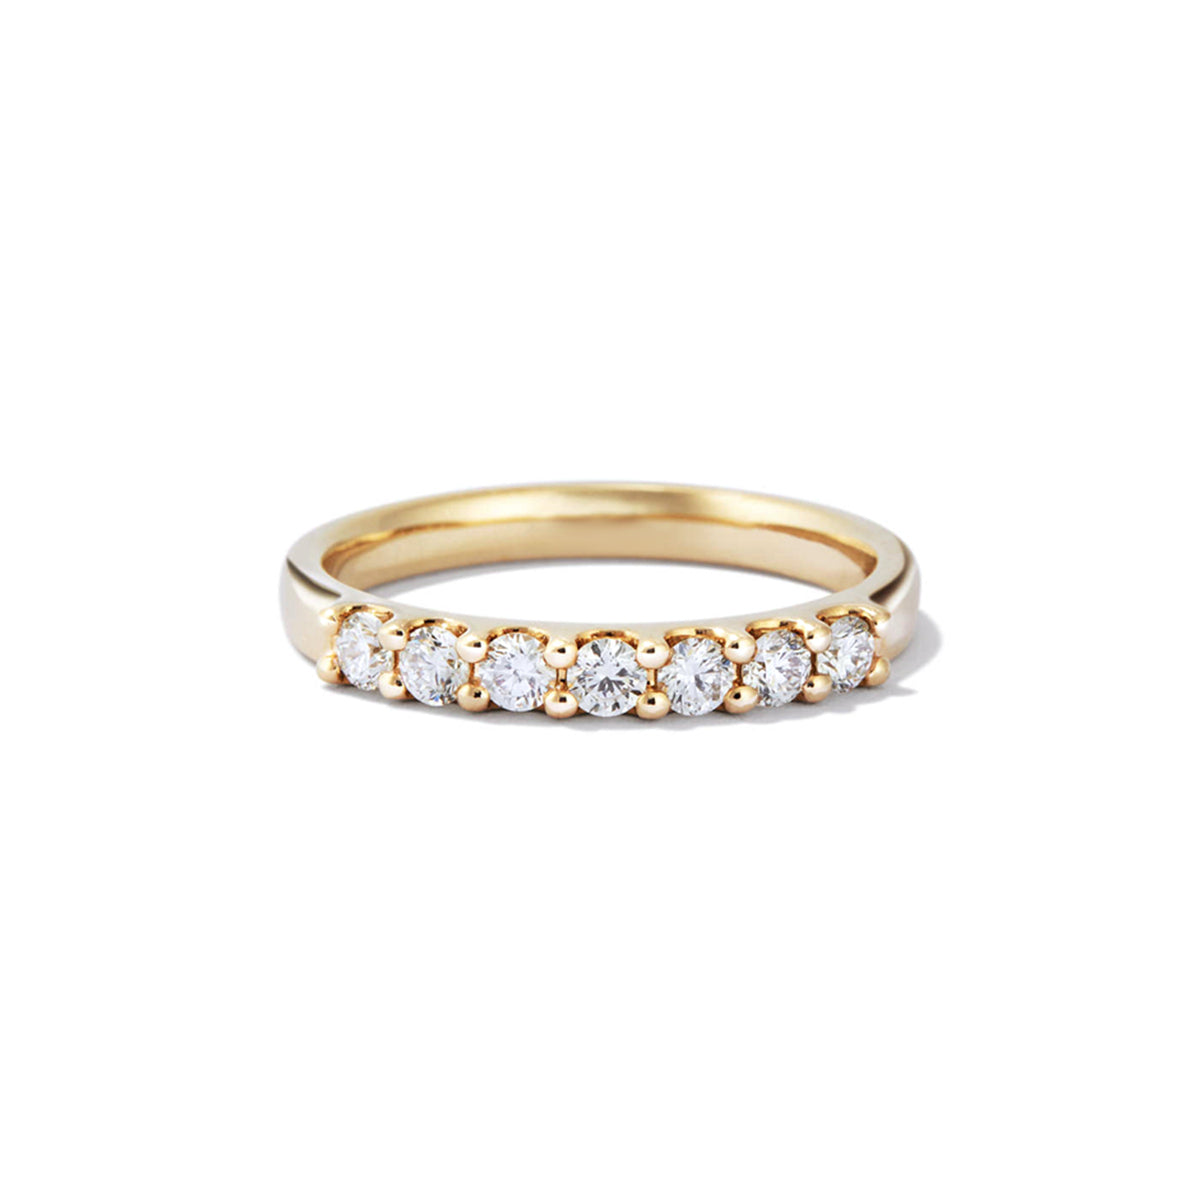 Shimmer Ring Yasemen Store Schmuck Accessoires Sterling Silber Sterlingsiber 18K Vergoldet Gold Zirkonia jewel jewelry ring